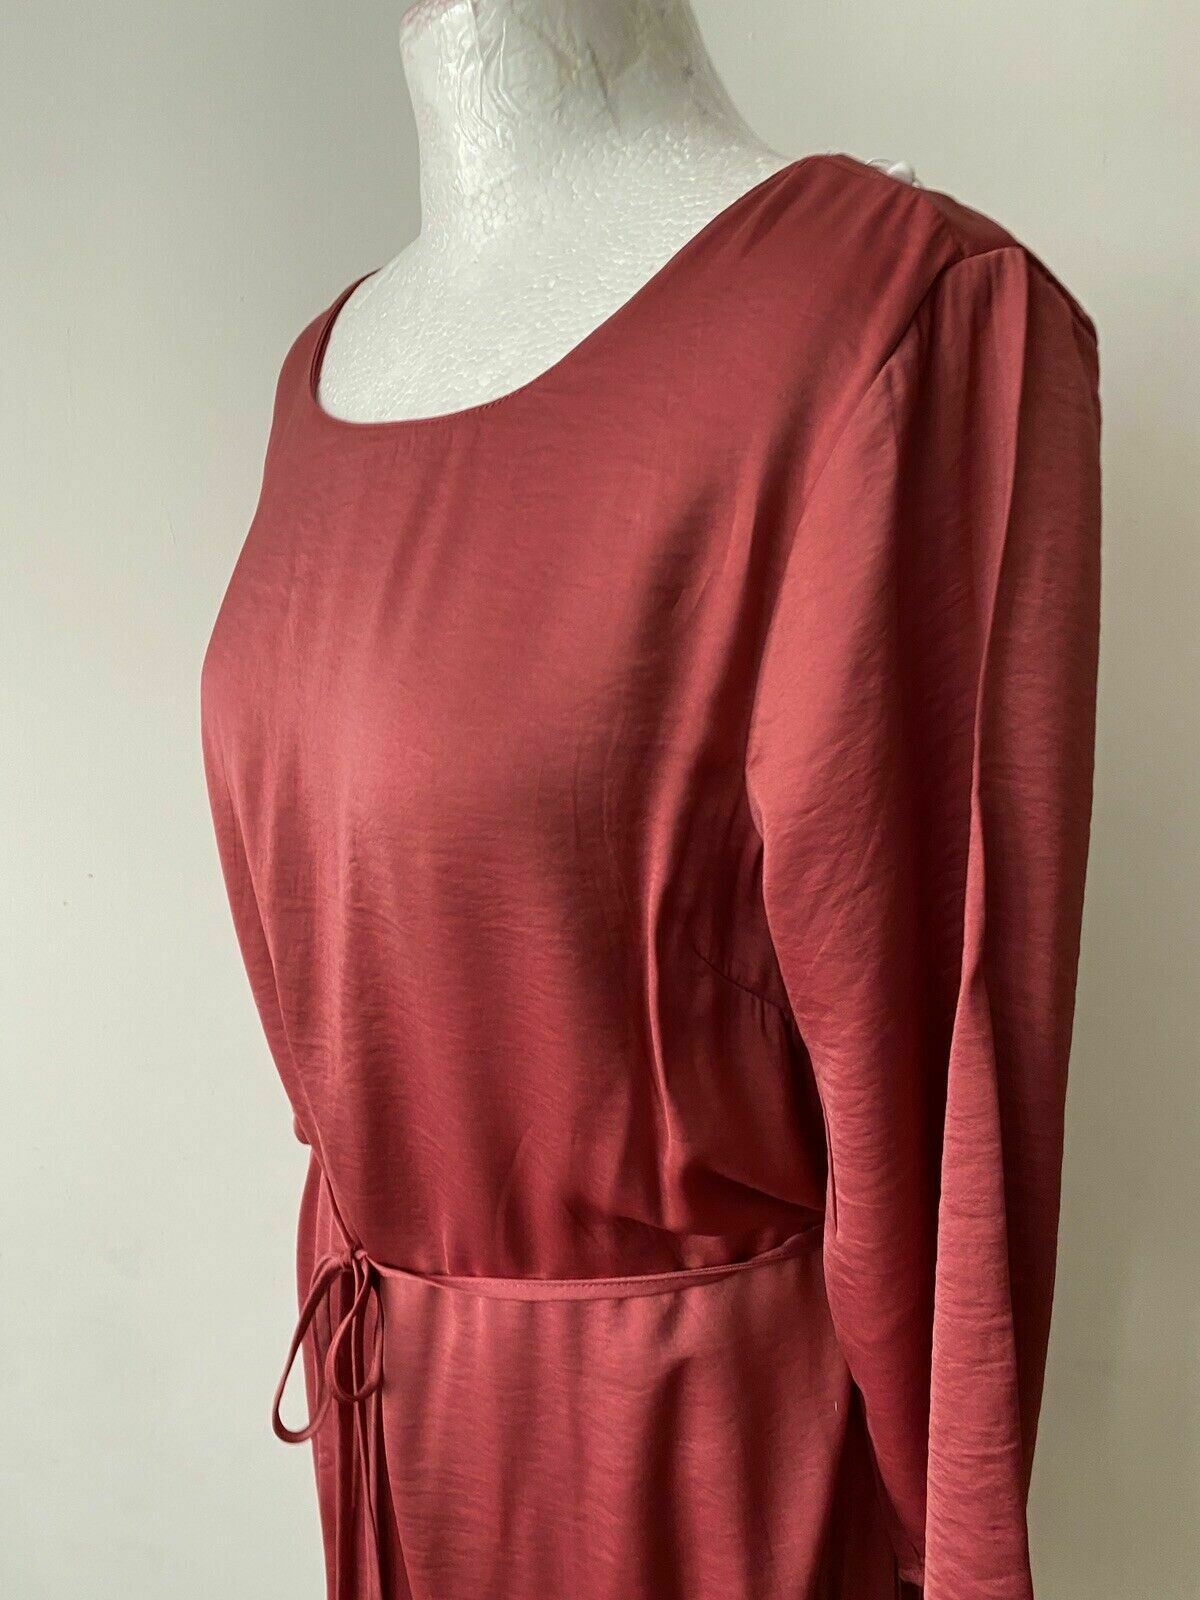 VILA Earth Red Dress 3/4 Sleeve Size 10 / 38 Tie Waist Lace Back